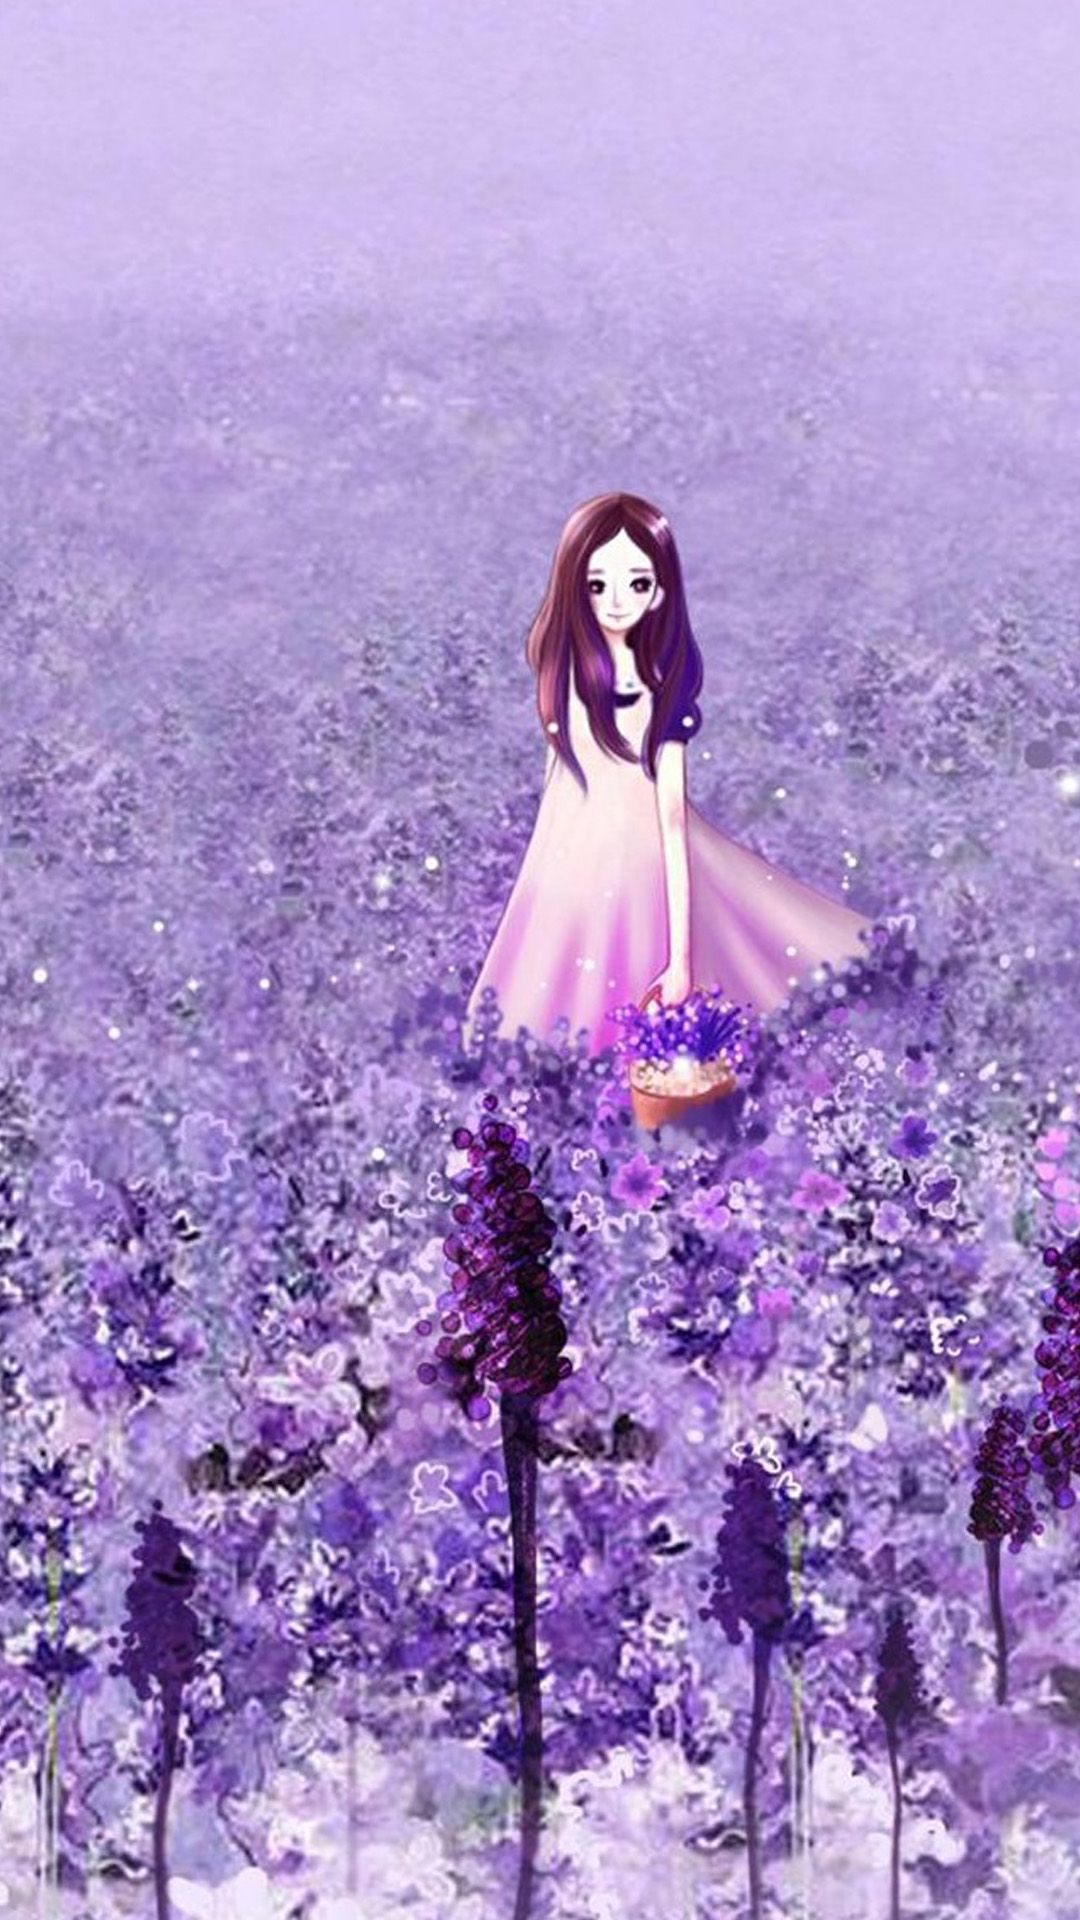 Anime Cute Girl In Purple Flower Garden iPhone 8 Wallpaper. Hình